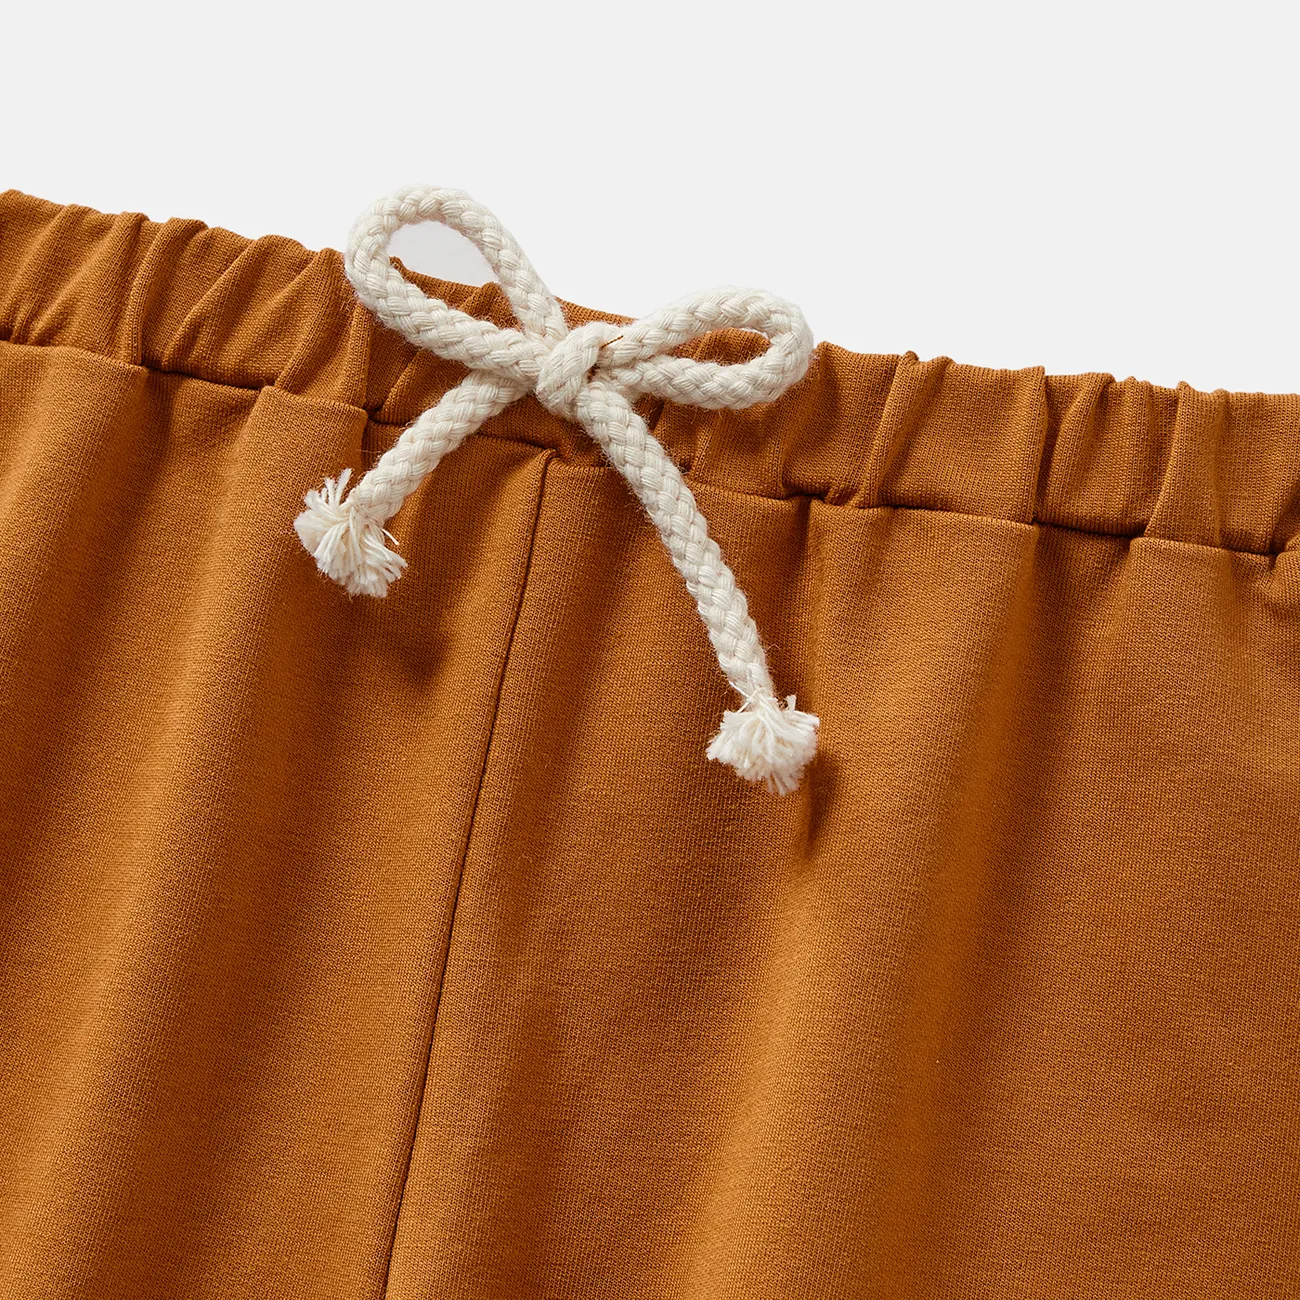 Baby Girl/Boy Cotton Solid Color Elasticized Pants Brown big image 1